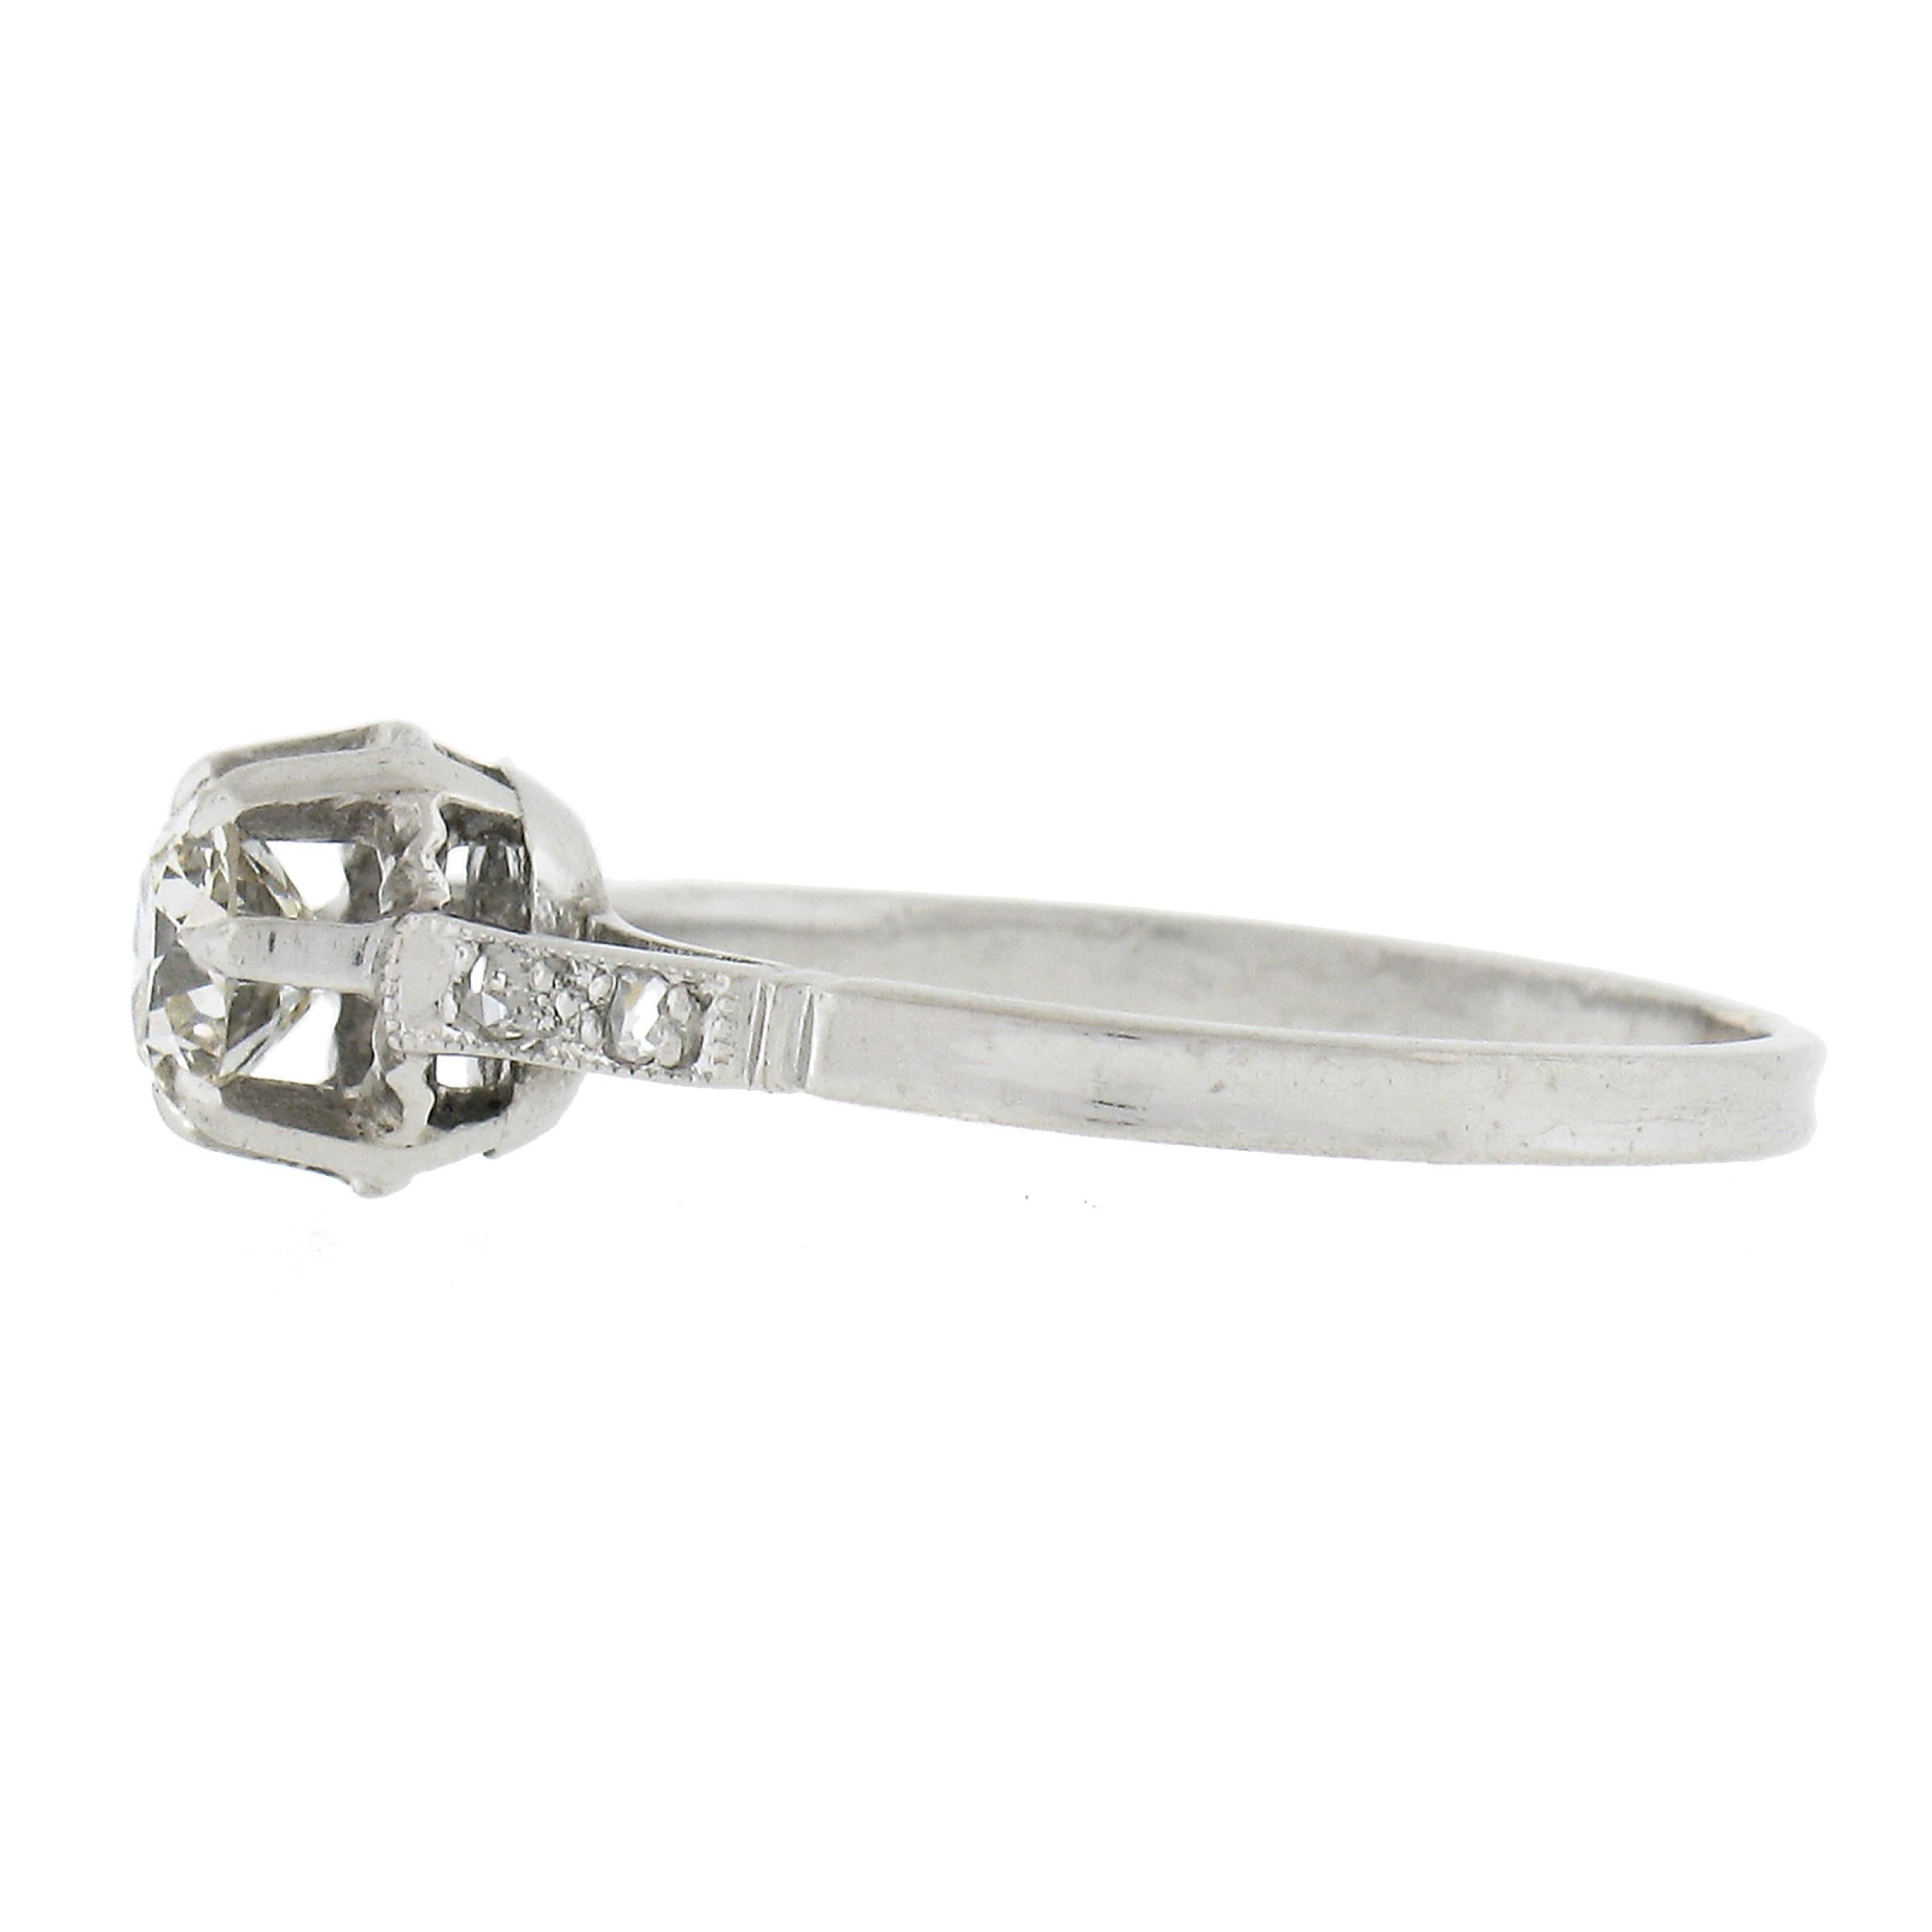 Antique Platinum 0.38ct Old Cut Diamond Solitaire Engagement Or Promise Ring 1